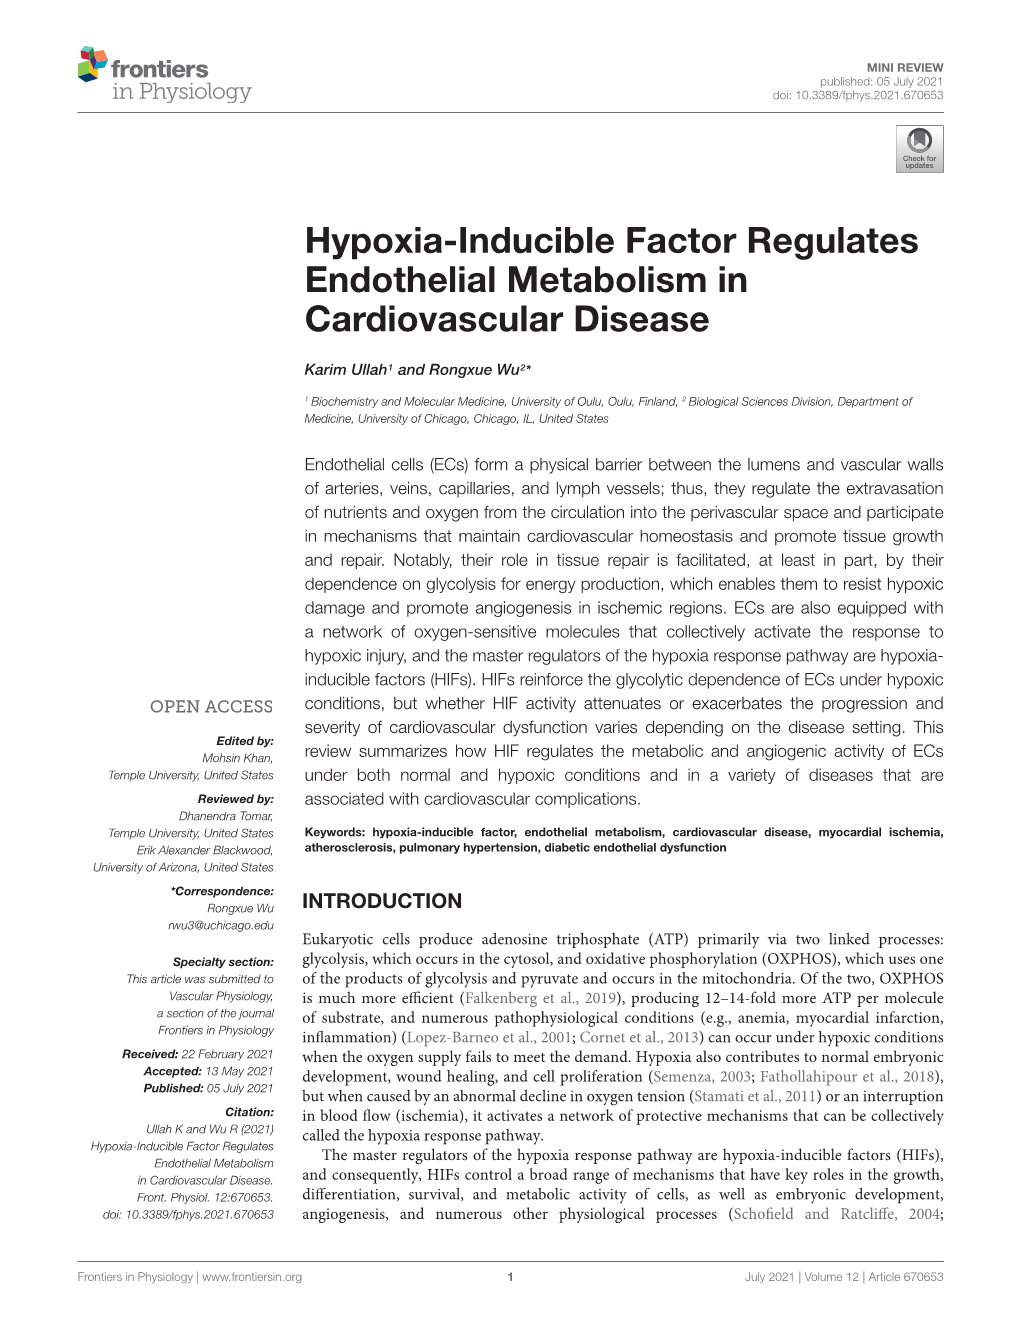 Hypoxia-Inducible Factor Regulates Endothelial Metabolism in Cardiovascular Disease